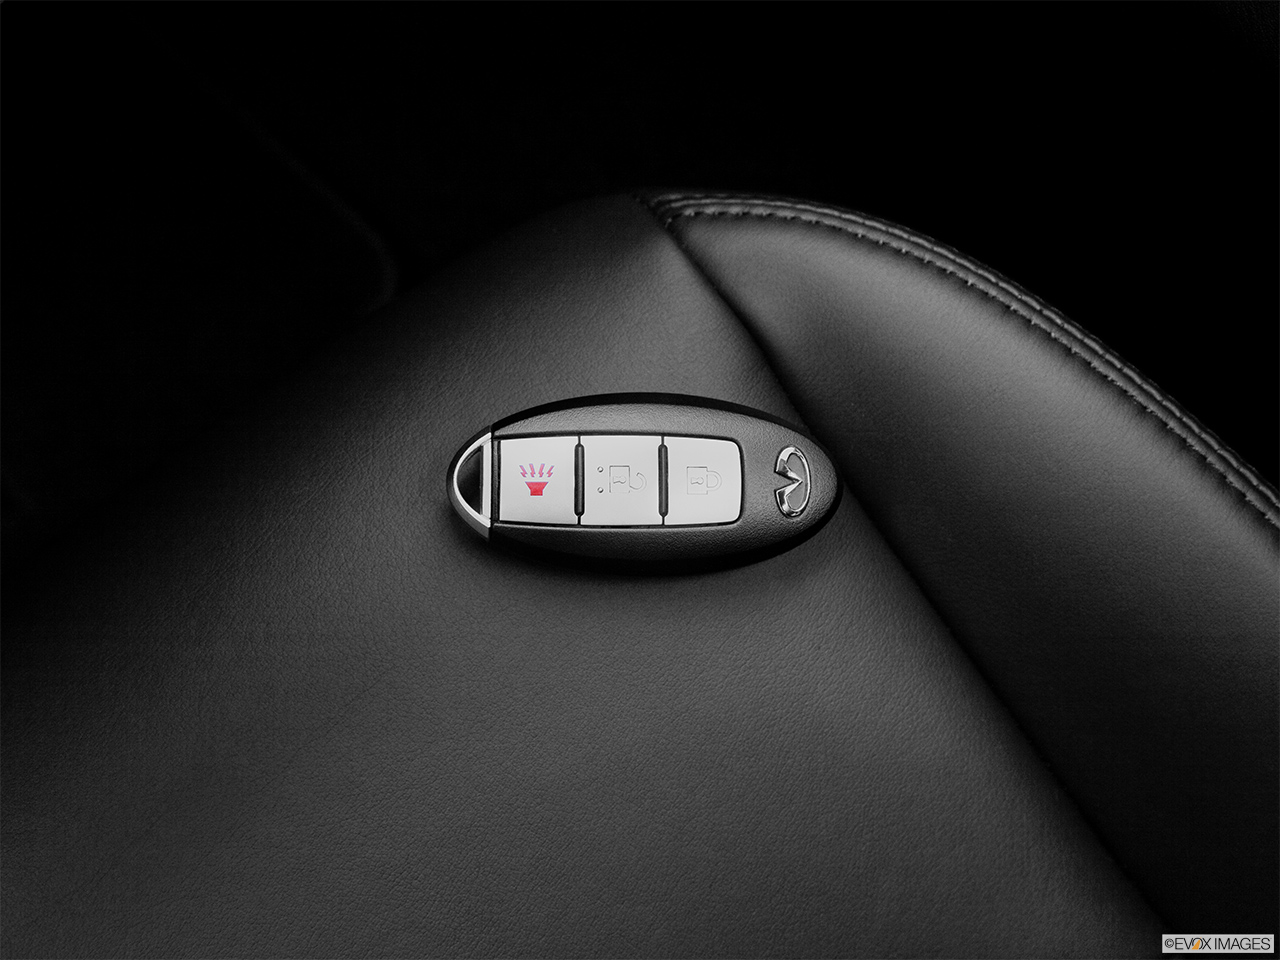 2012 Infiniti EX EX35 Journey Key fob on driver's seat. 